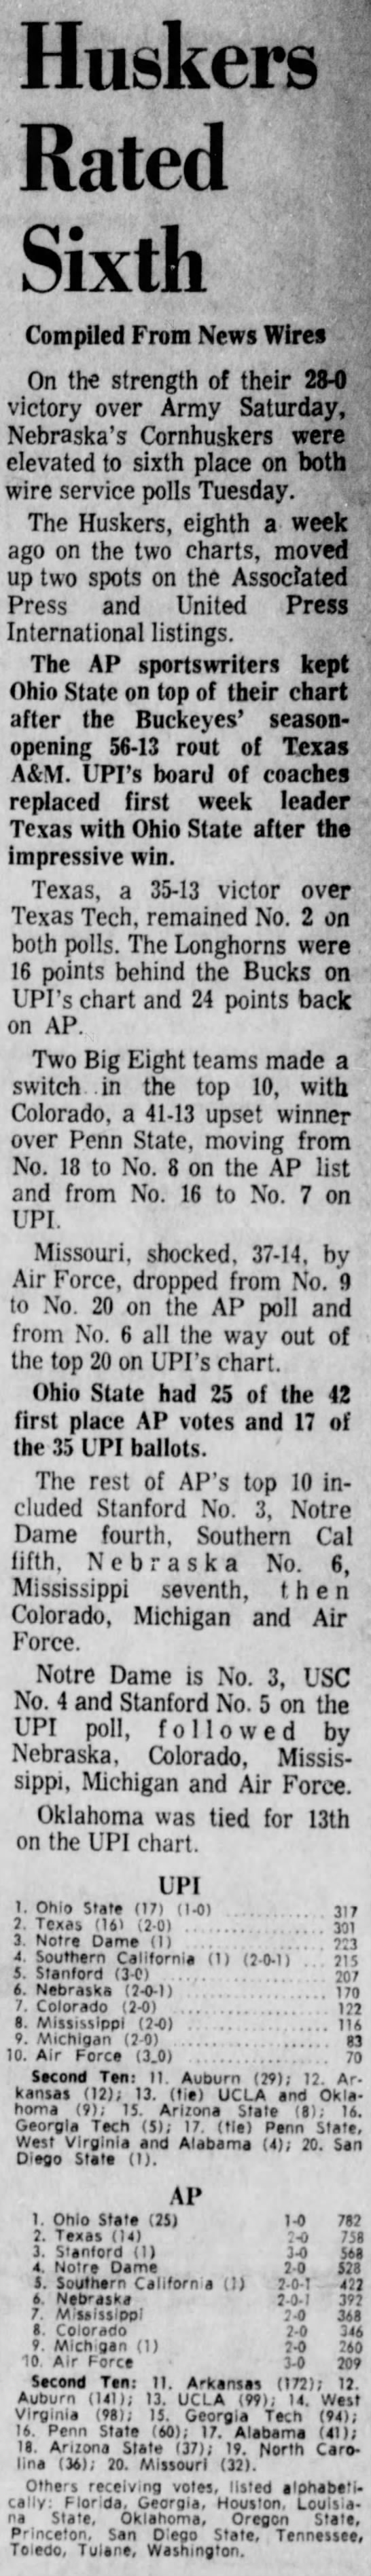 1970.09.29 AP & UPI polls - 